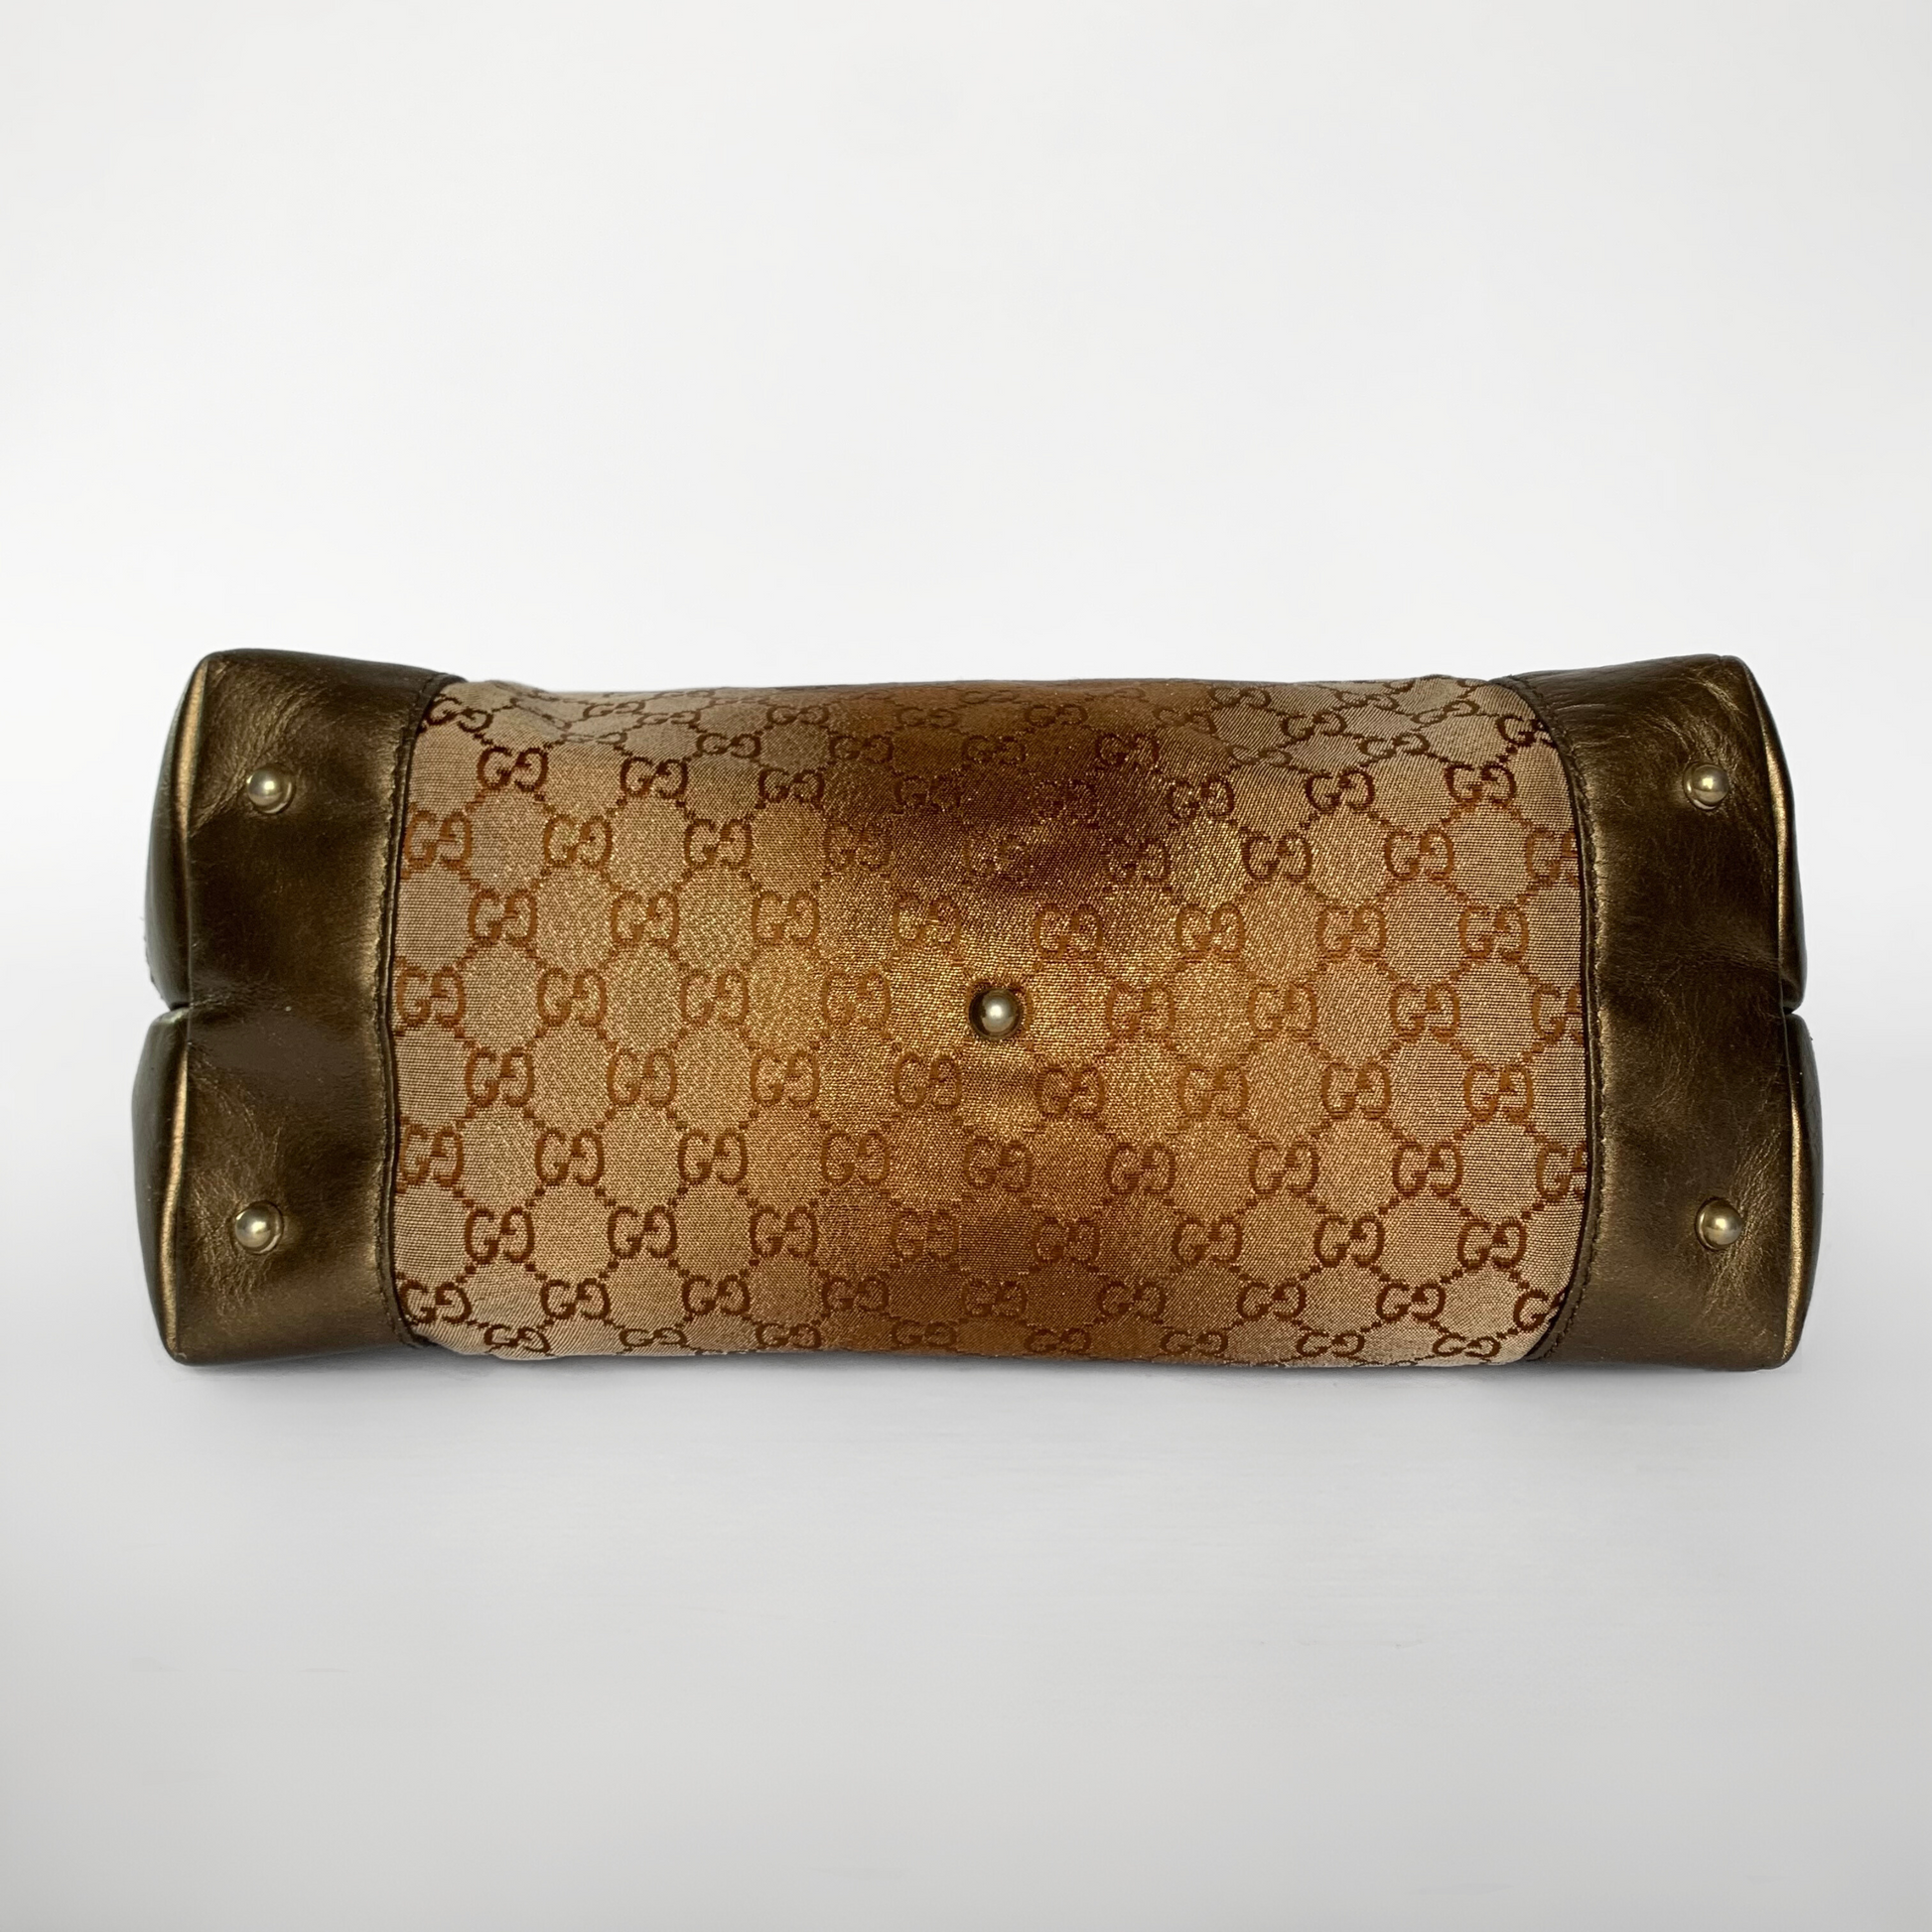 Gucci Gucci Tote Monogram Canvas - Shoulder bag - Etoile Luxury Vintage